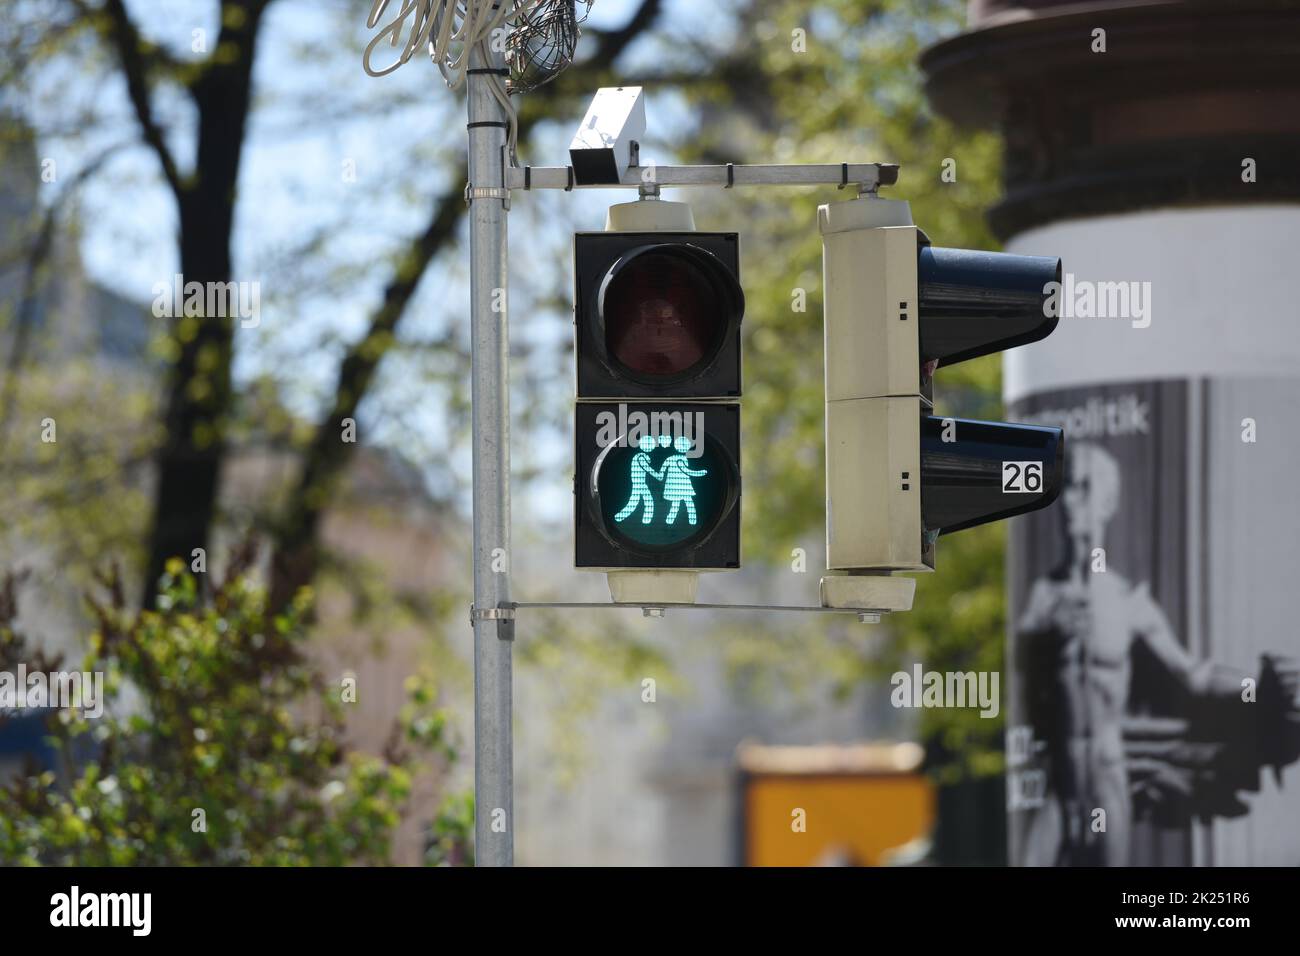 Ampel in Wien mit Ampelpärchen - Traffic light in Vienna with a pair of traffic lights Stock Photo